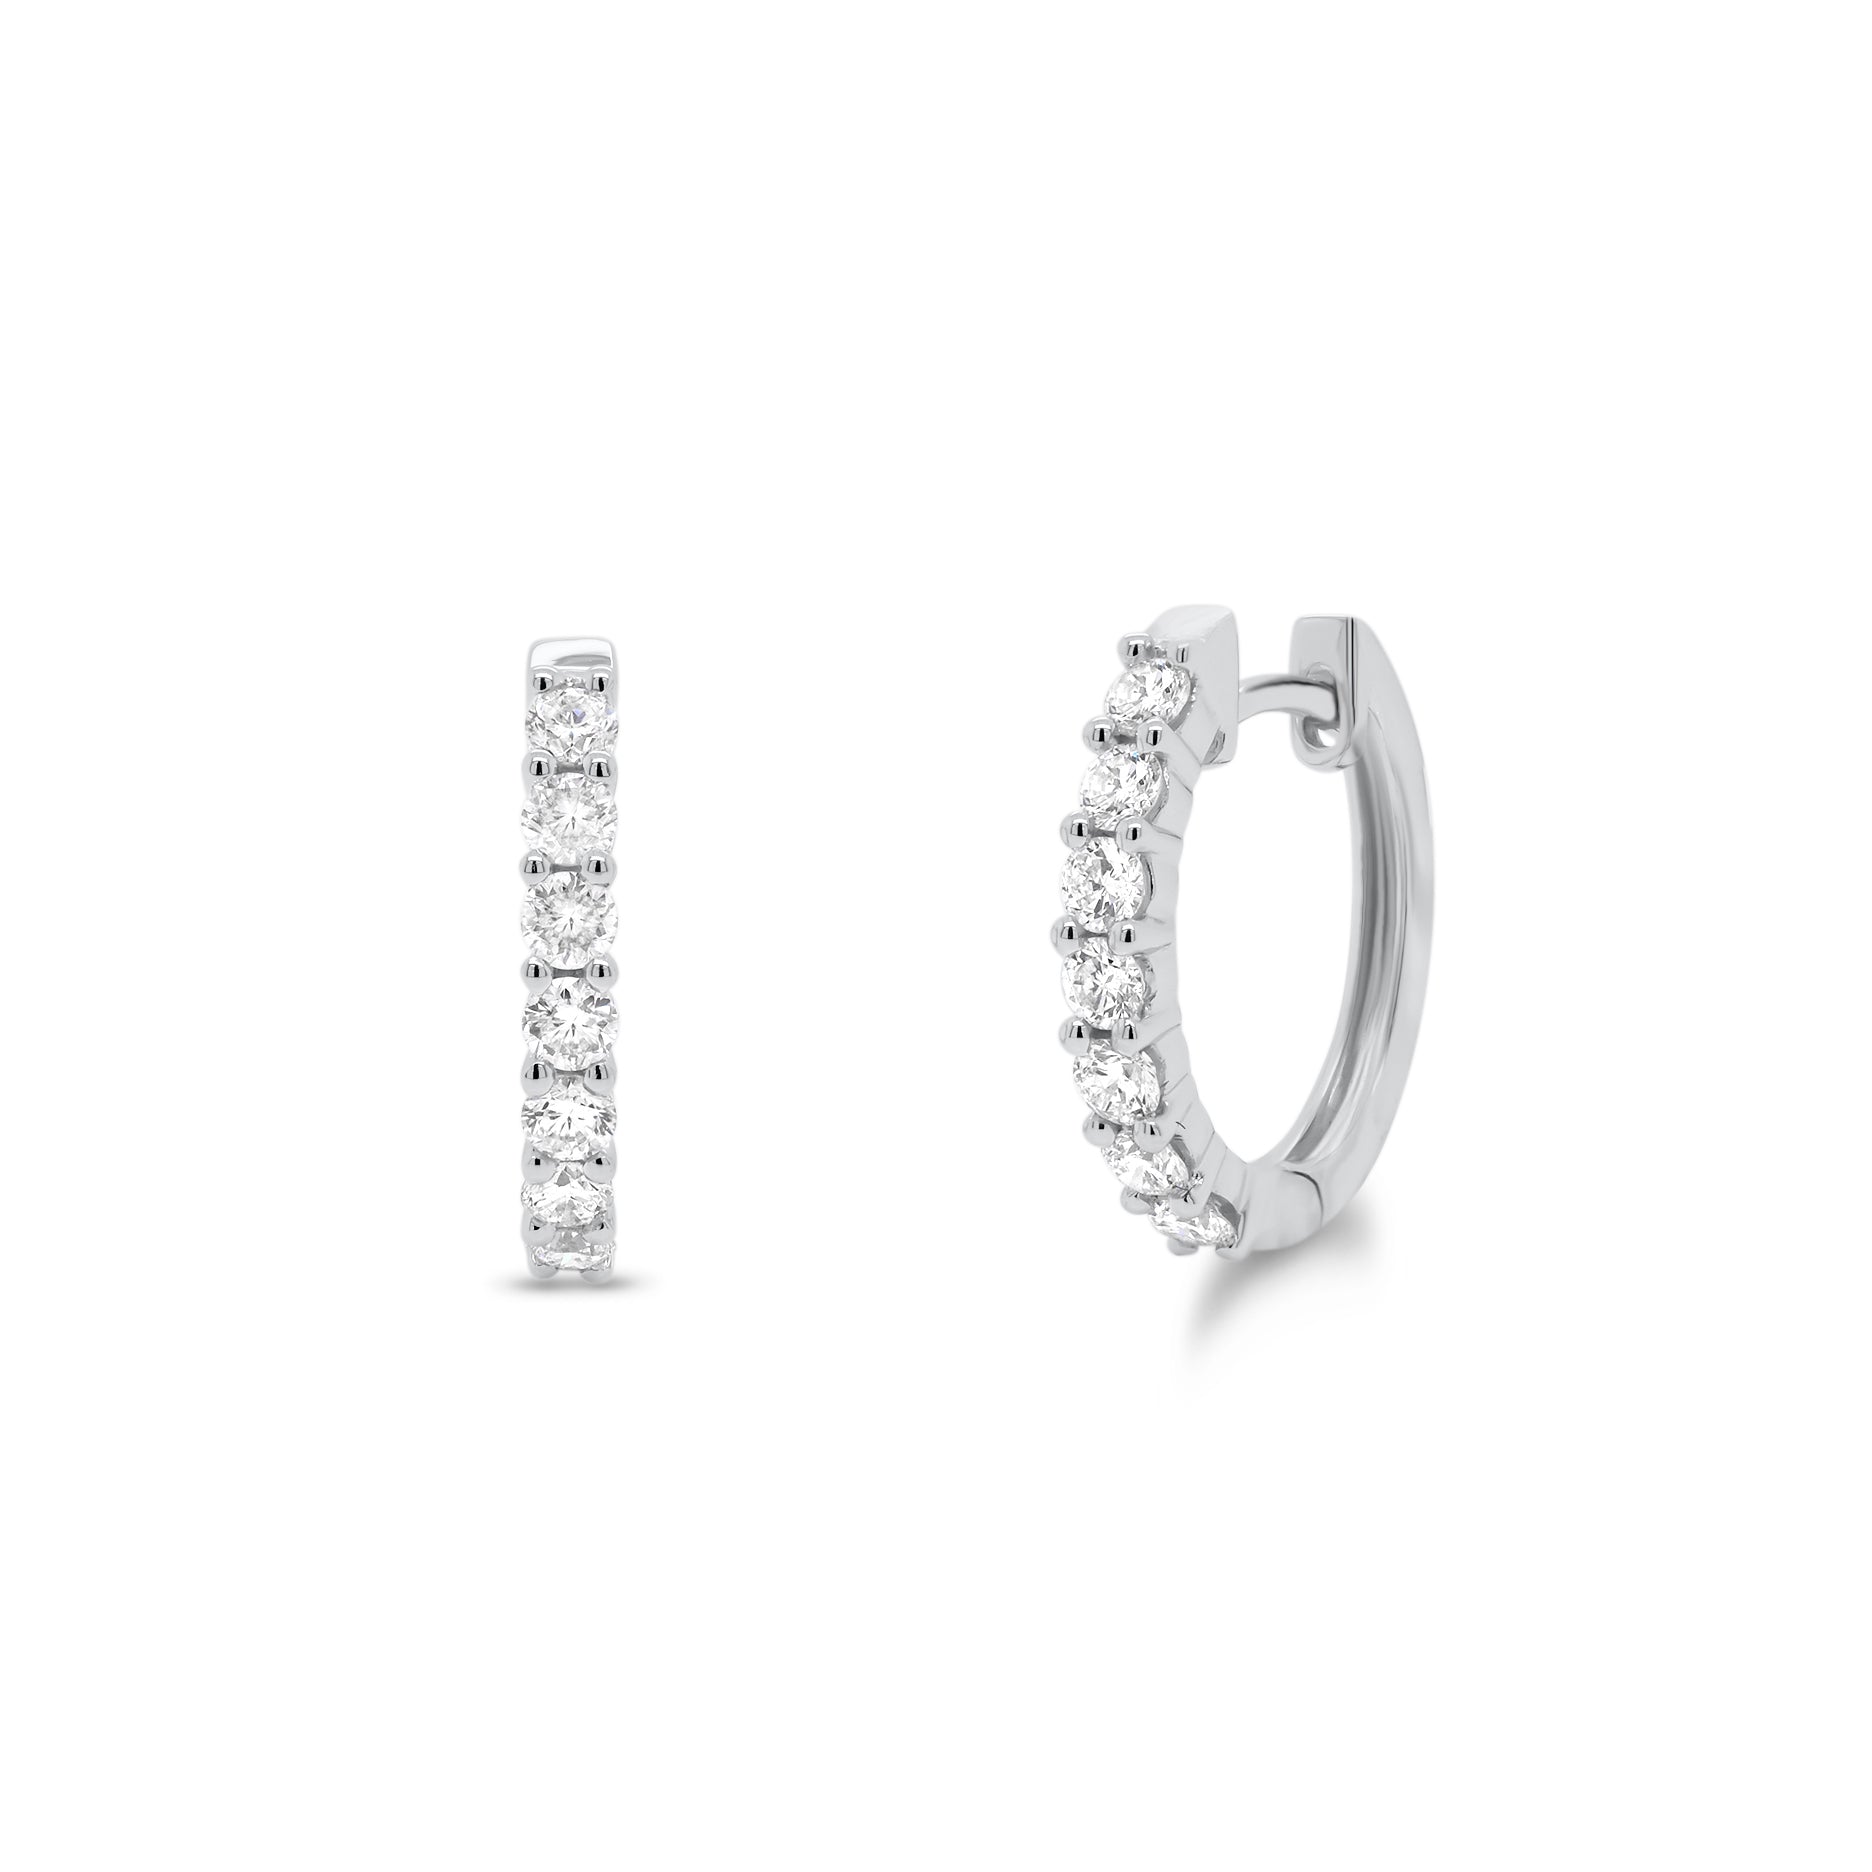 Prong-set diamond huggie earrings - 18K gold weighing 2.68 grams  - 14 round diamonds totaling 0.56 carats